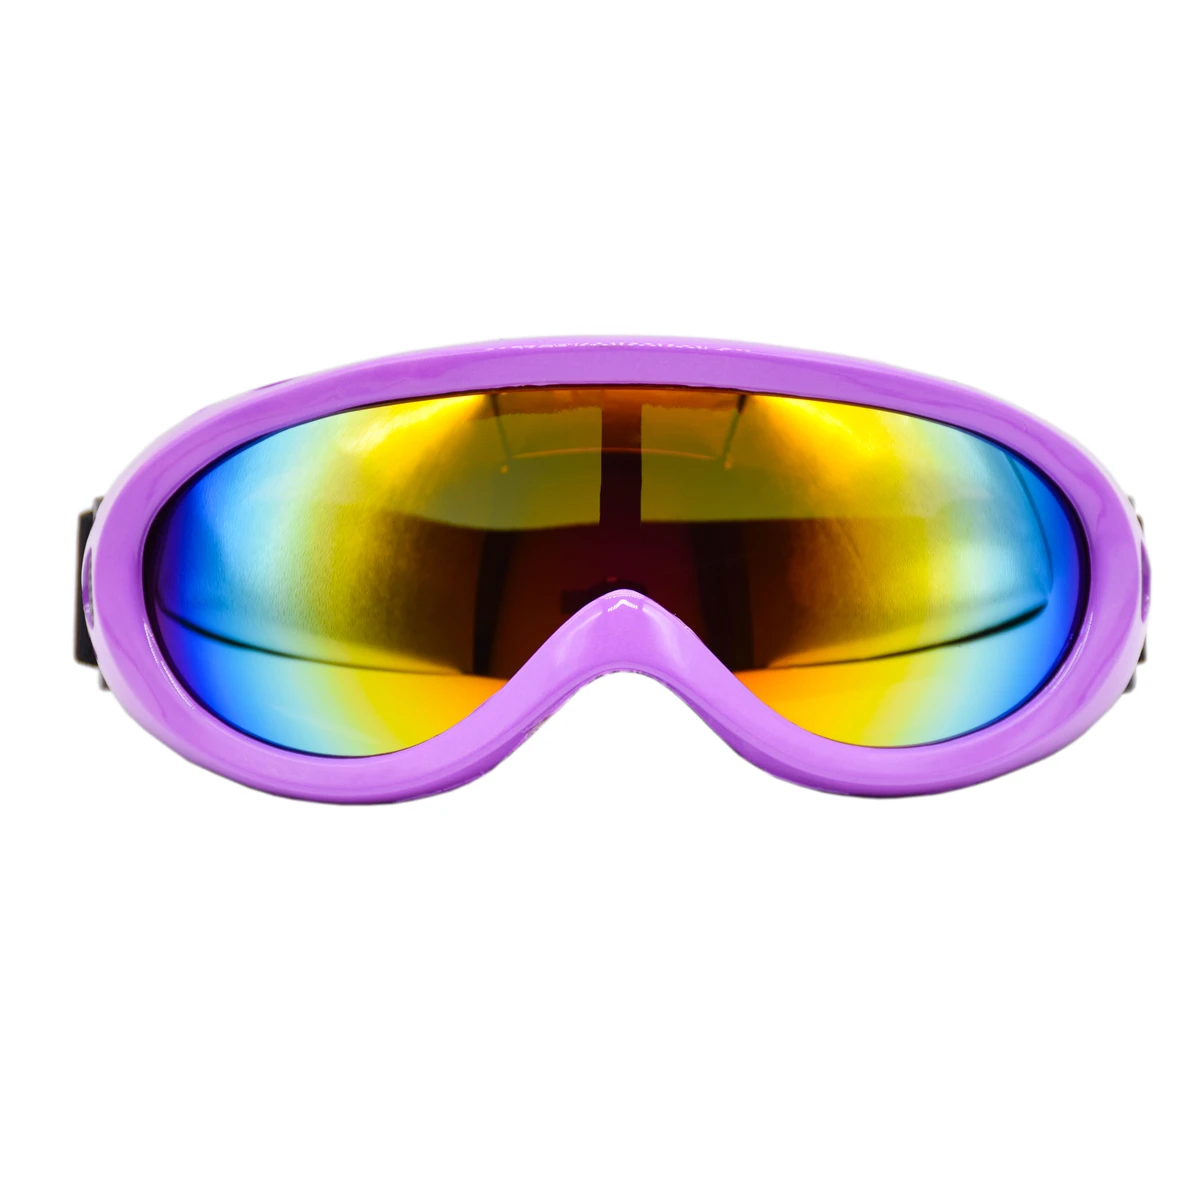 Youth Snowboard Gafas Ski Goggles Boys Girls Snow Goggle Snowboard Mask Winter oculos de neve Kids Ski Skiing Glasses Goggles - Цвет: ASGE018006